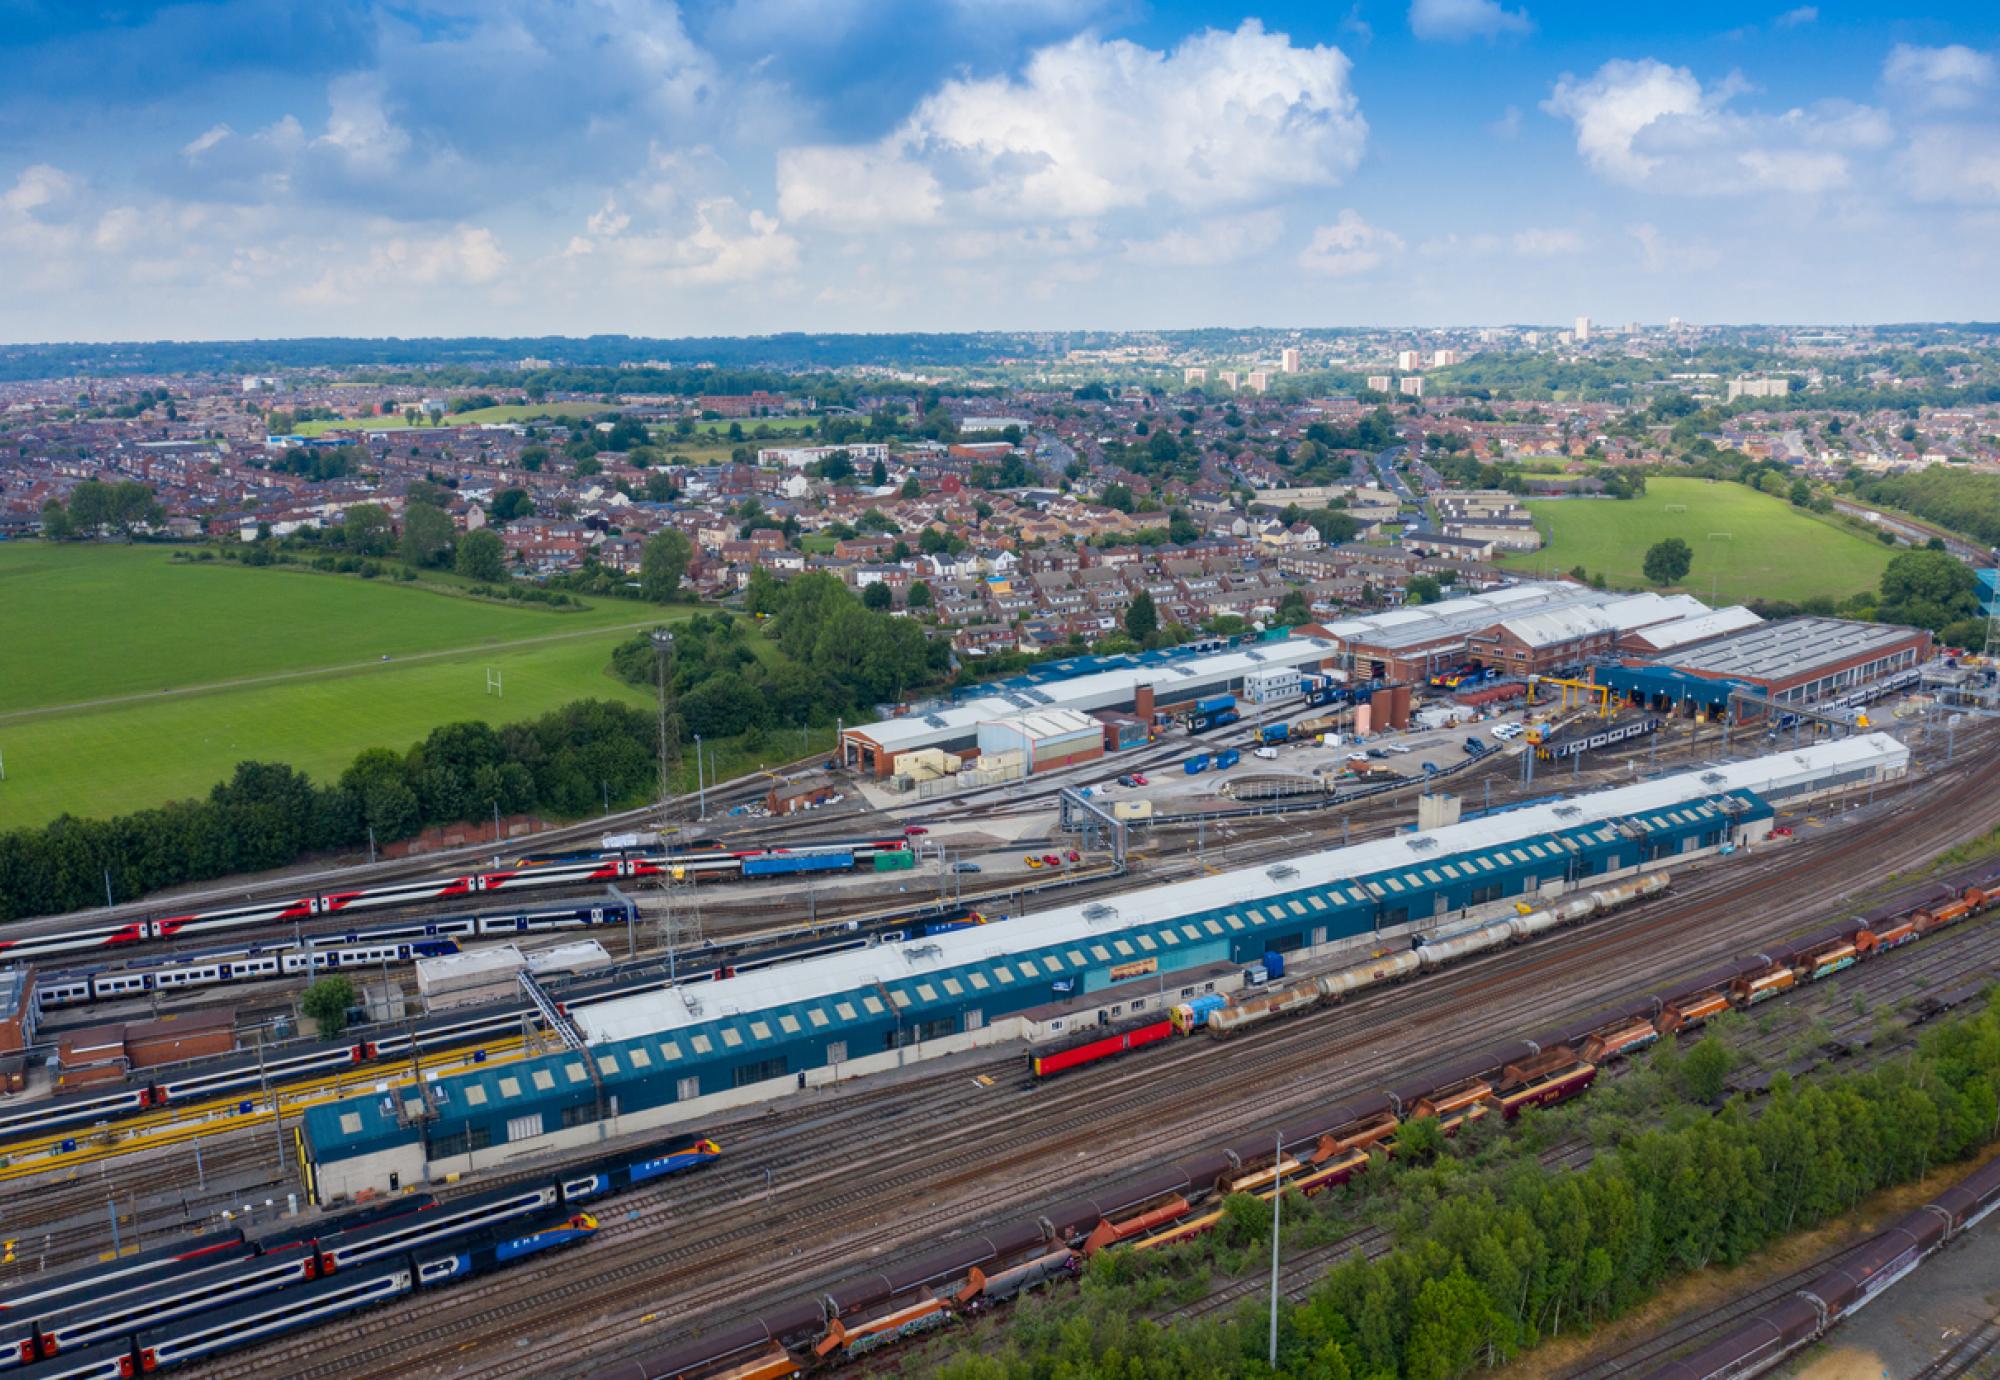 Image of Halton rail yard in North Yorkshire